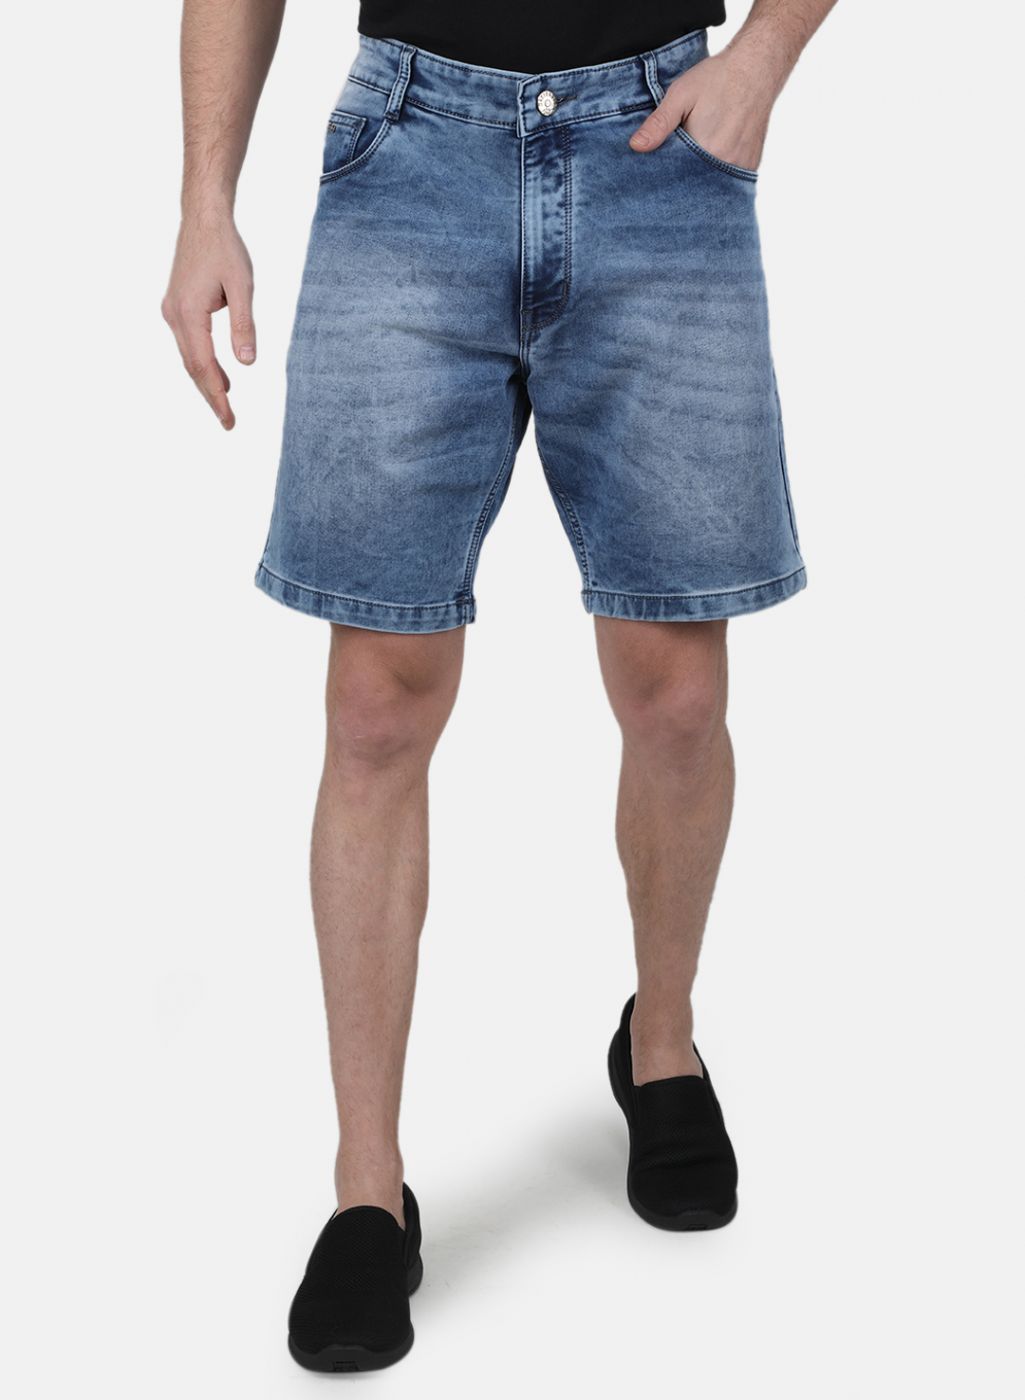 Buy Denim Jeans Shorts Men Men's Jean Shorts, Denim Shorts Men pleated  Front Shorts Blue Jean Shorts, 90's Shorts, Size 34 Shorts, 64 Online in  India - Etsy